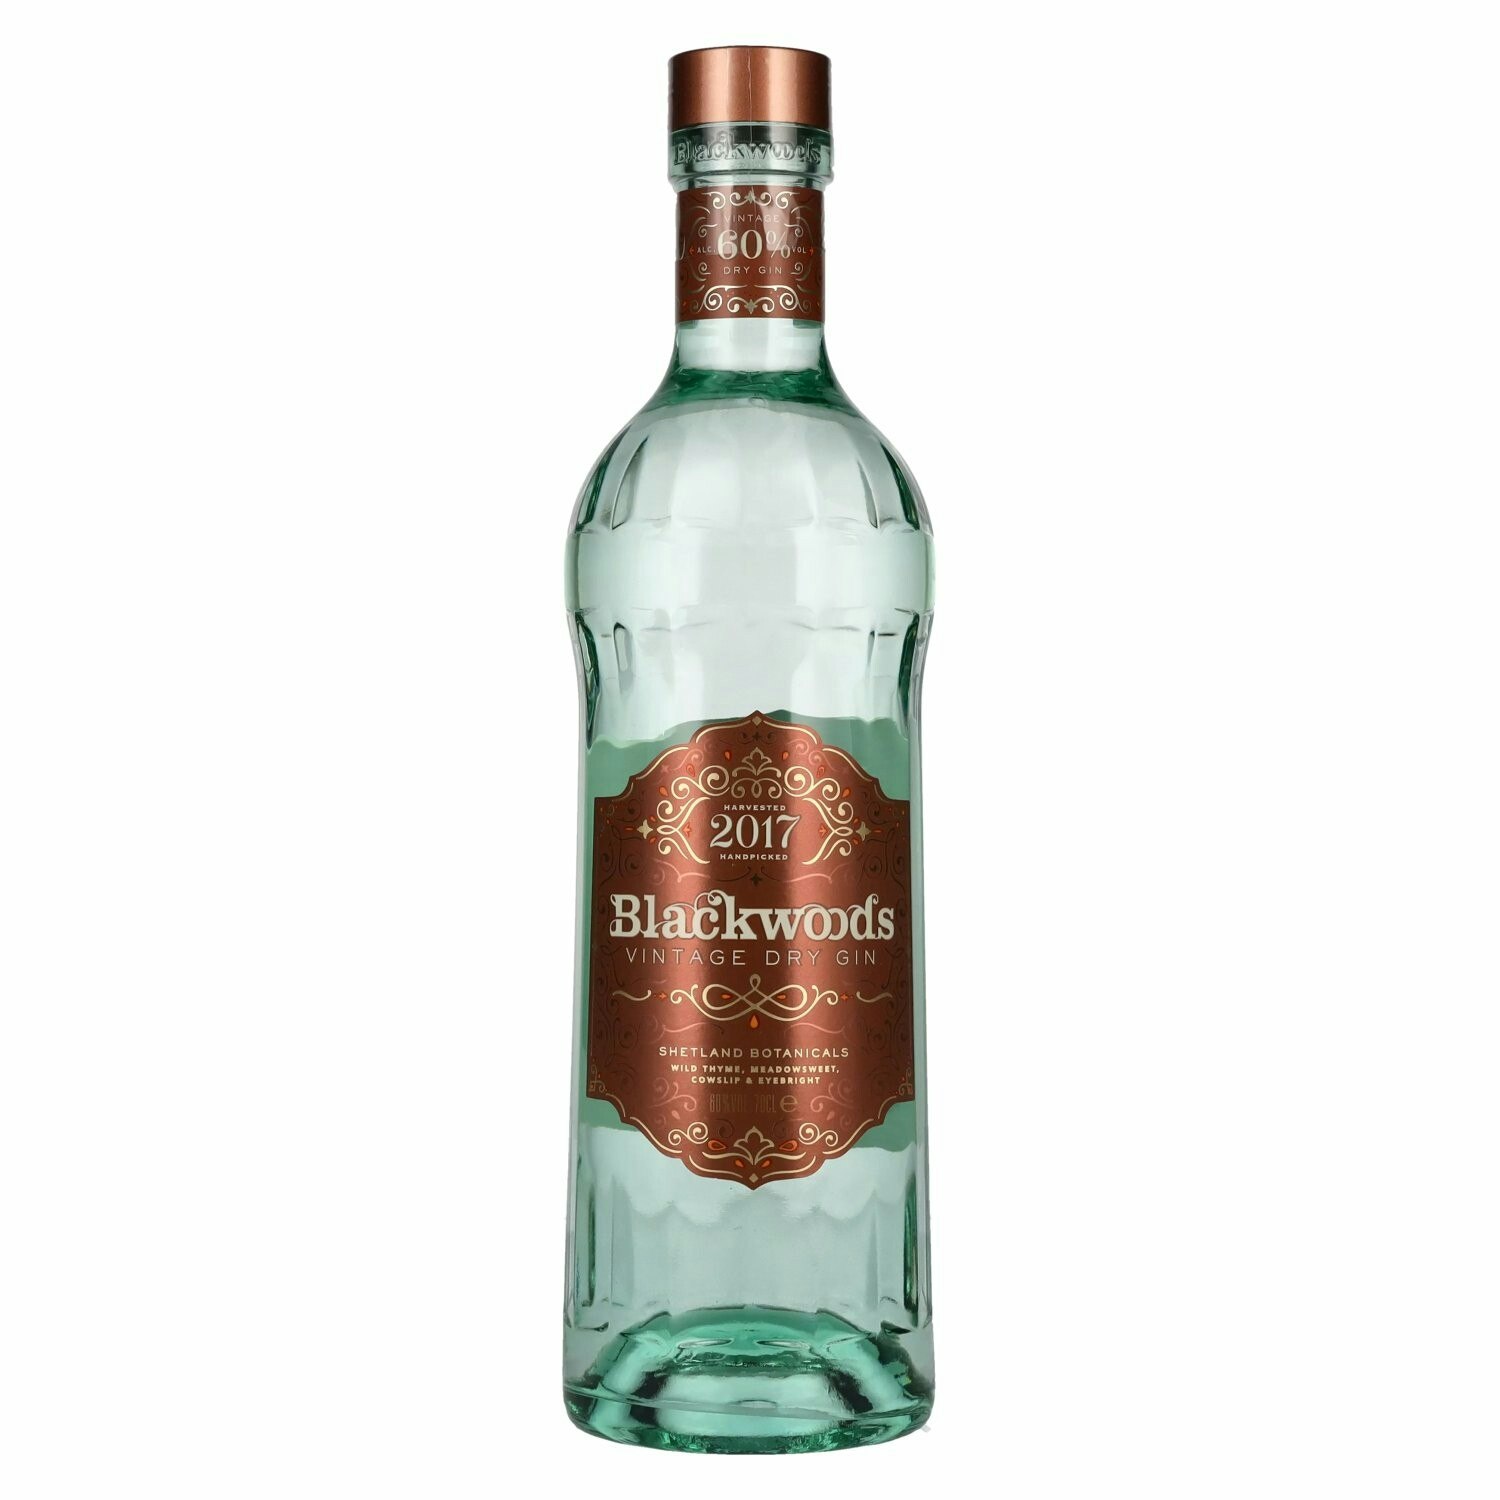 Blackwoods Vintage Dry Gin Limited Edition OVERPROOF 2017 60% Vol. 0,7l